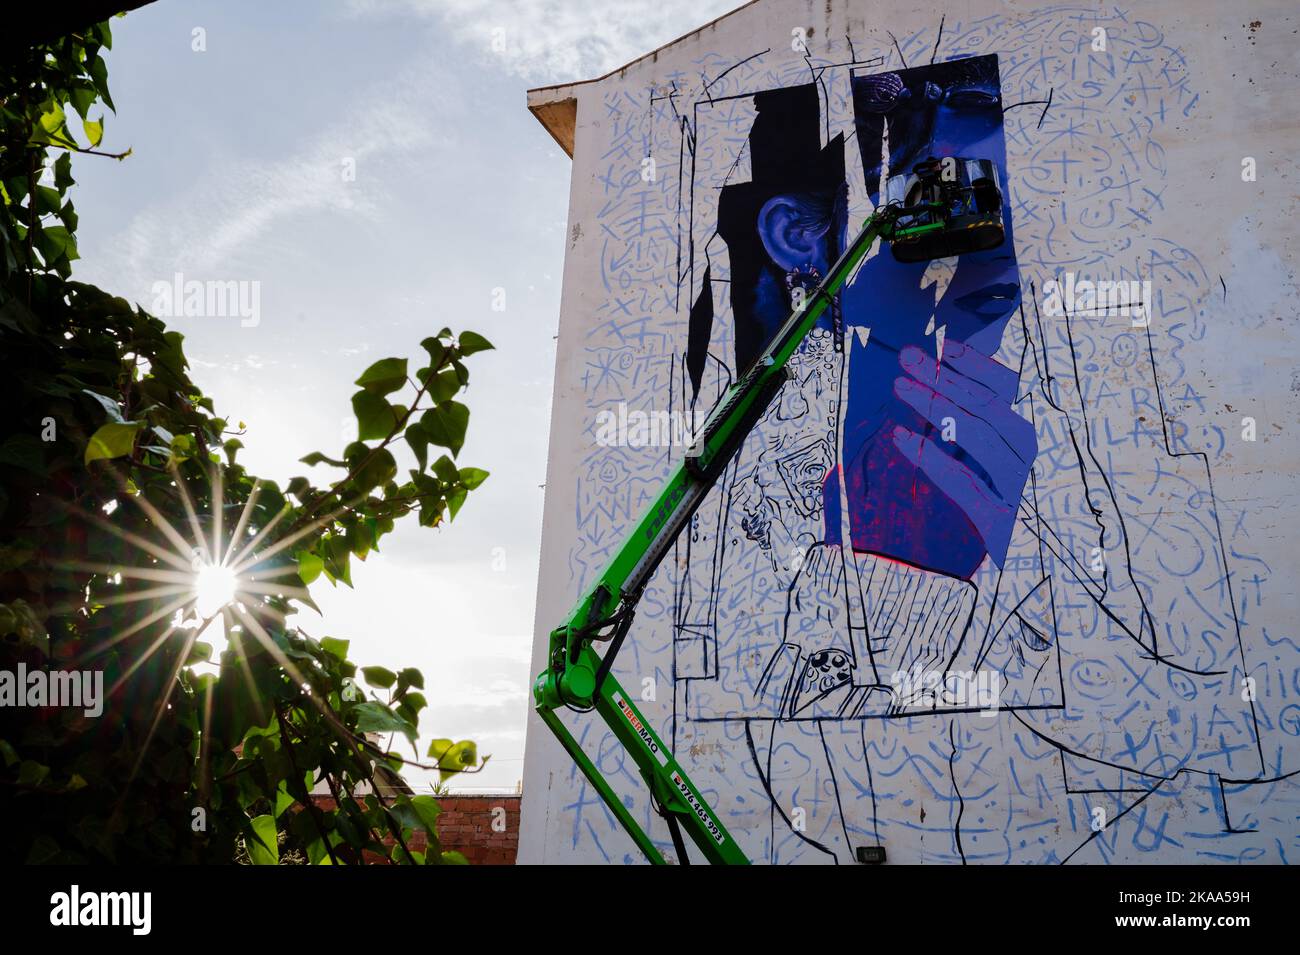 Artist Murfin paints a mural during Asalto International Urban Art Festival in Barrio Isabel of Zaragoza, Spain Stock Photo